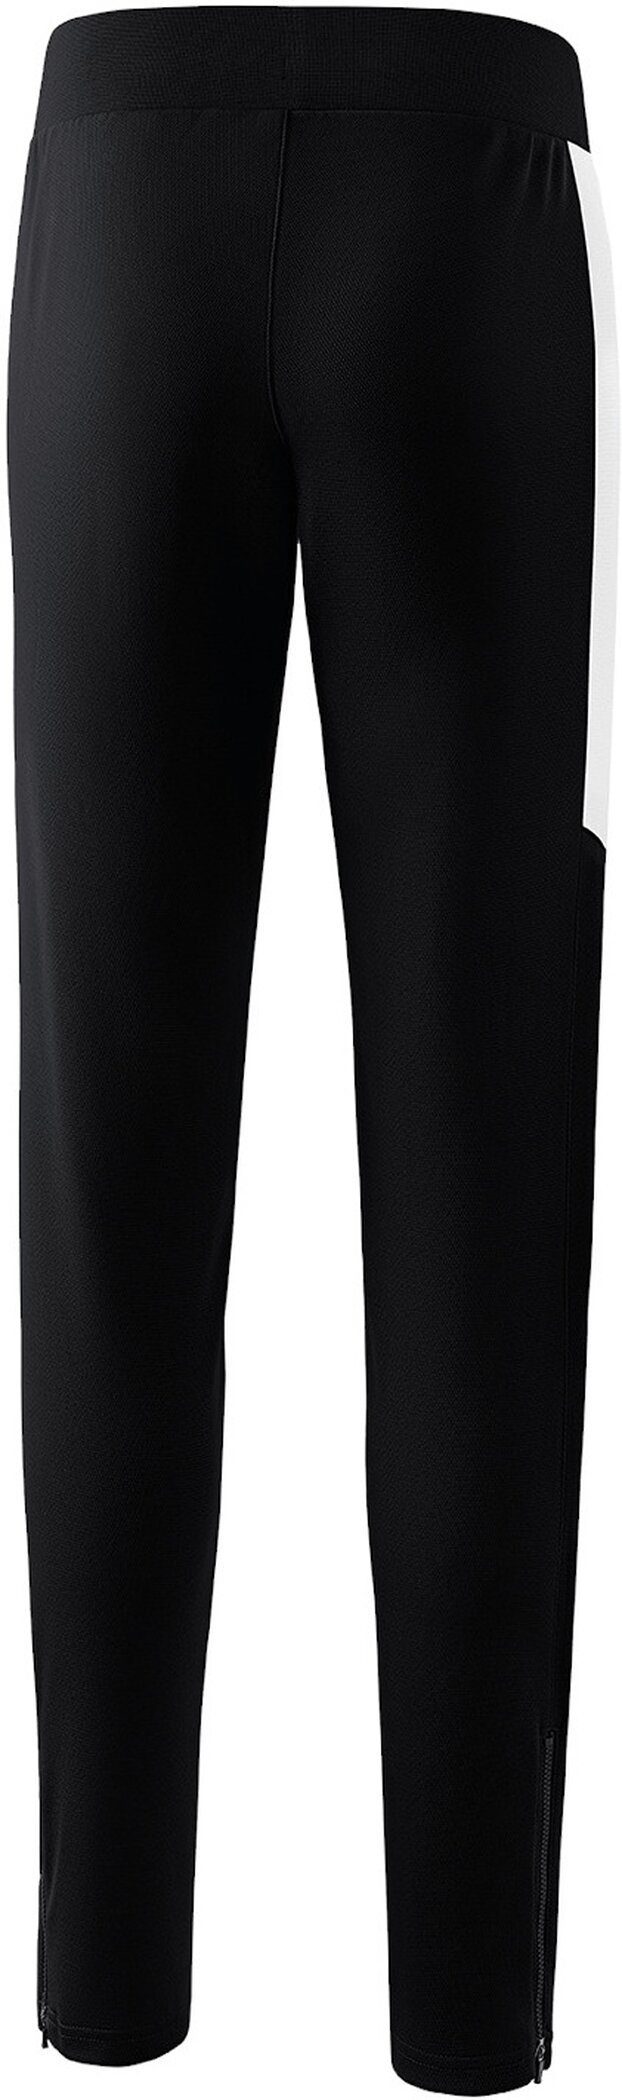 Jogginghose SQUAD pants black/white schwarzweiss Erima training